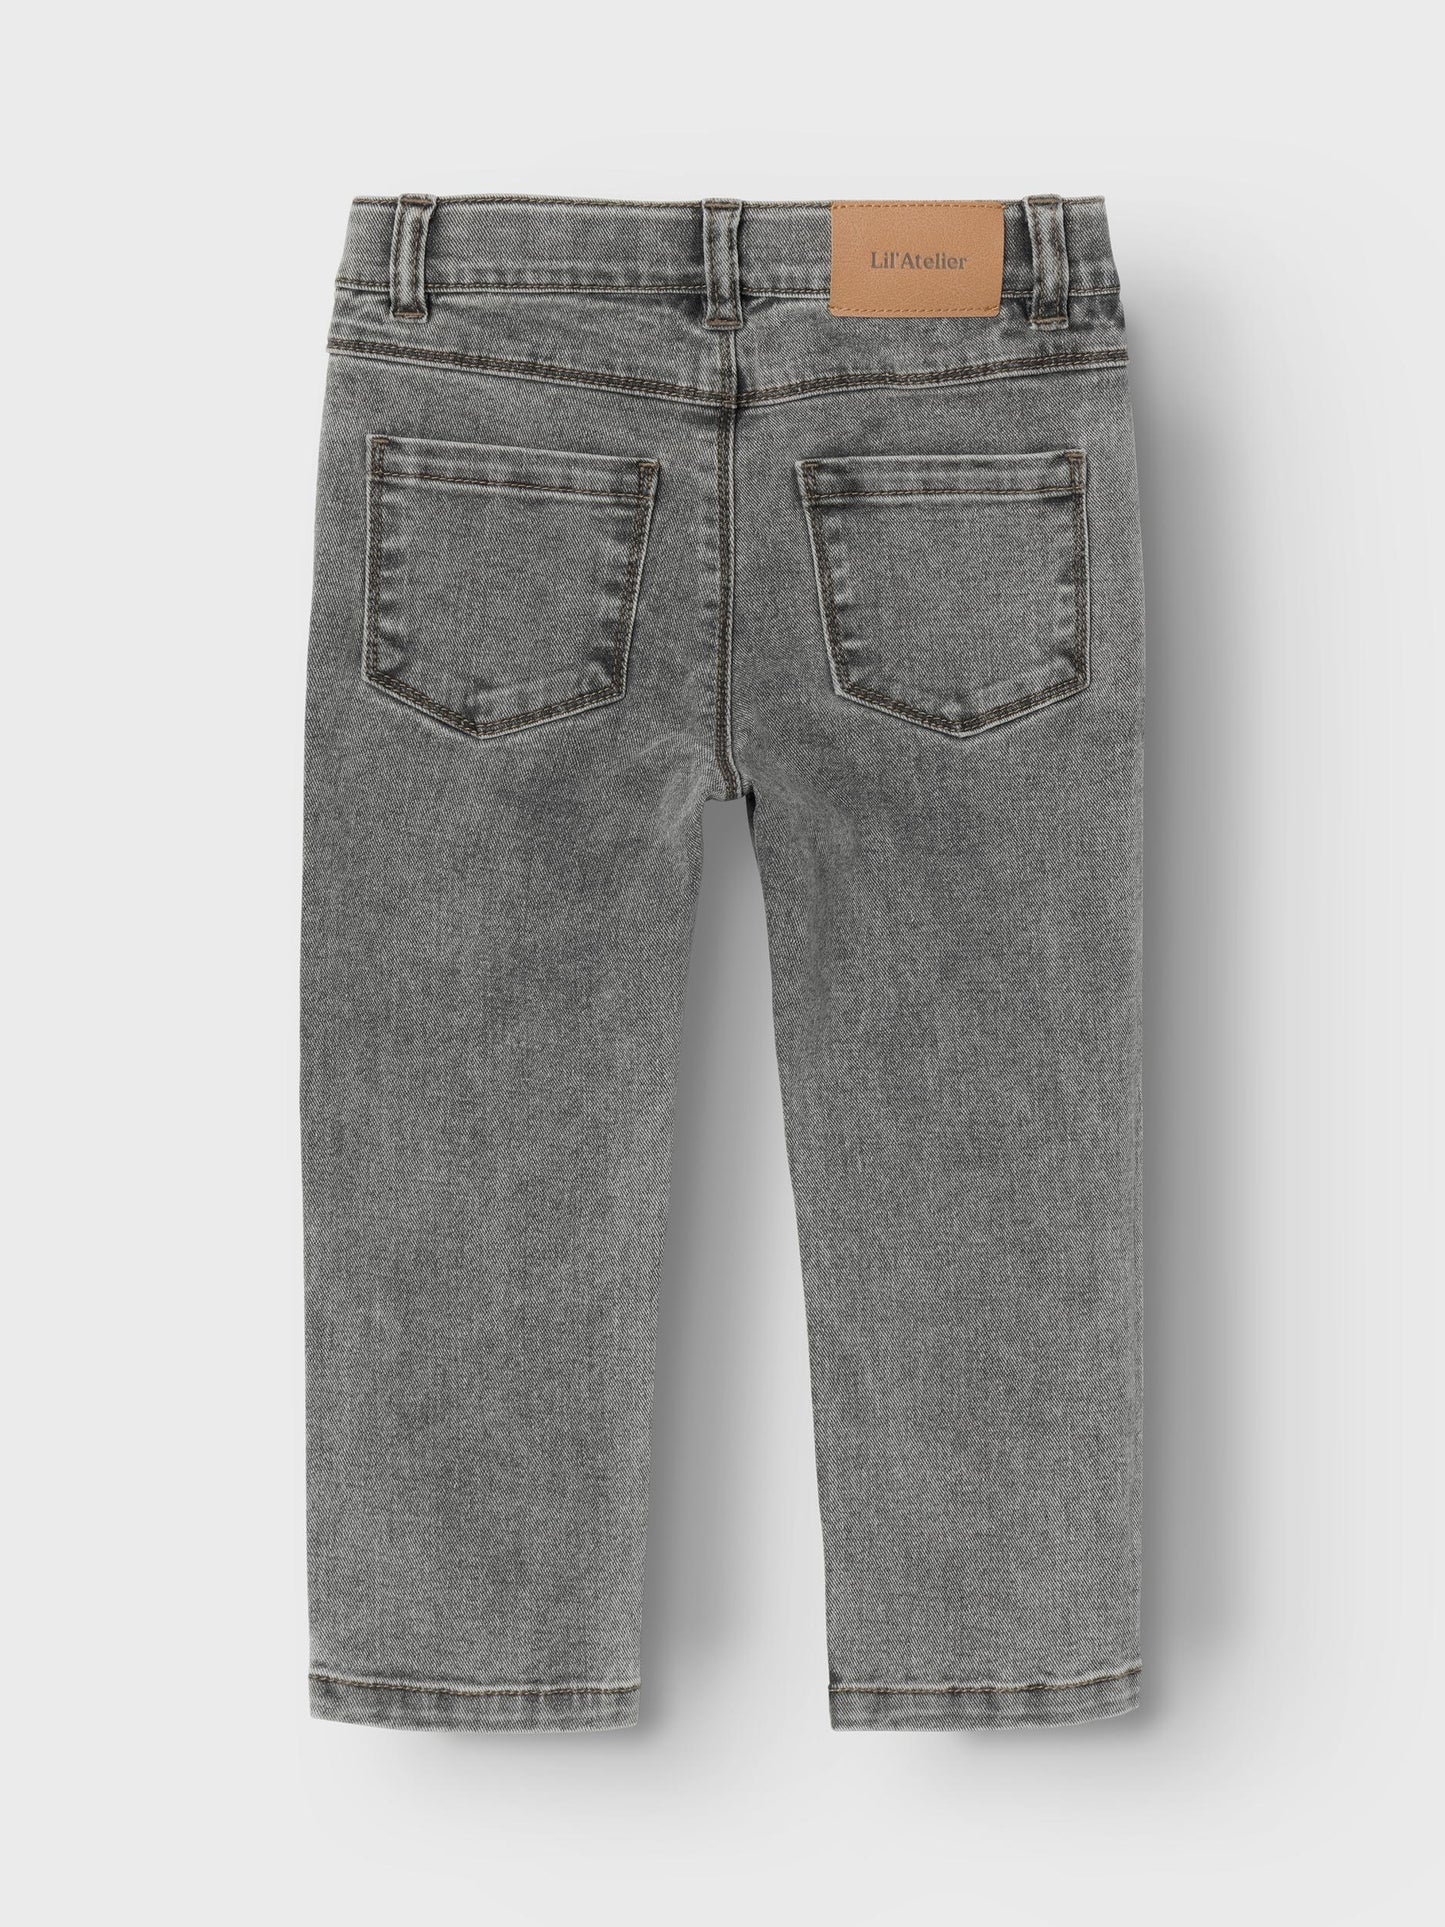 Lil atelier - Jeans - Light grey denim